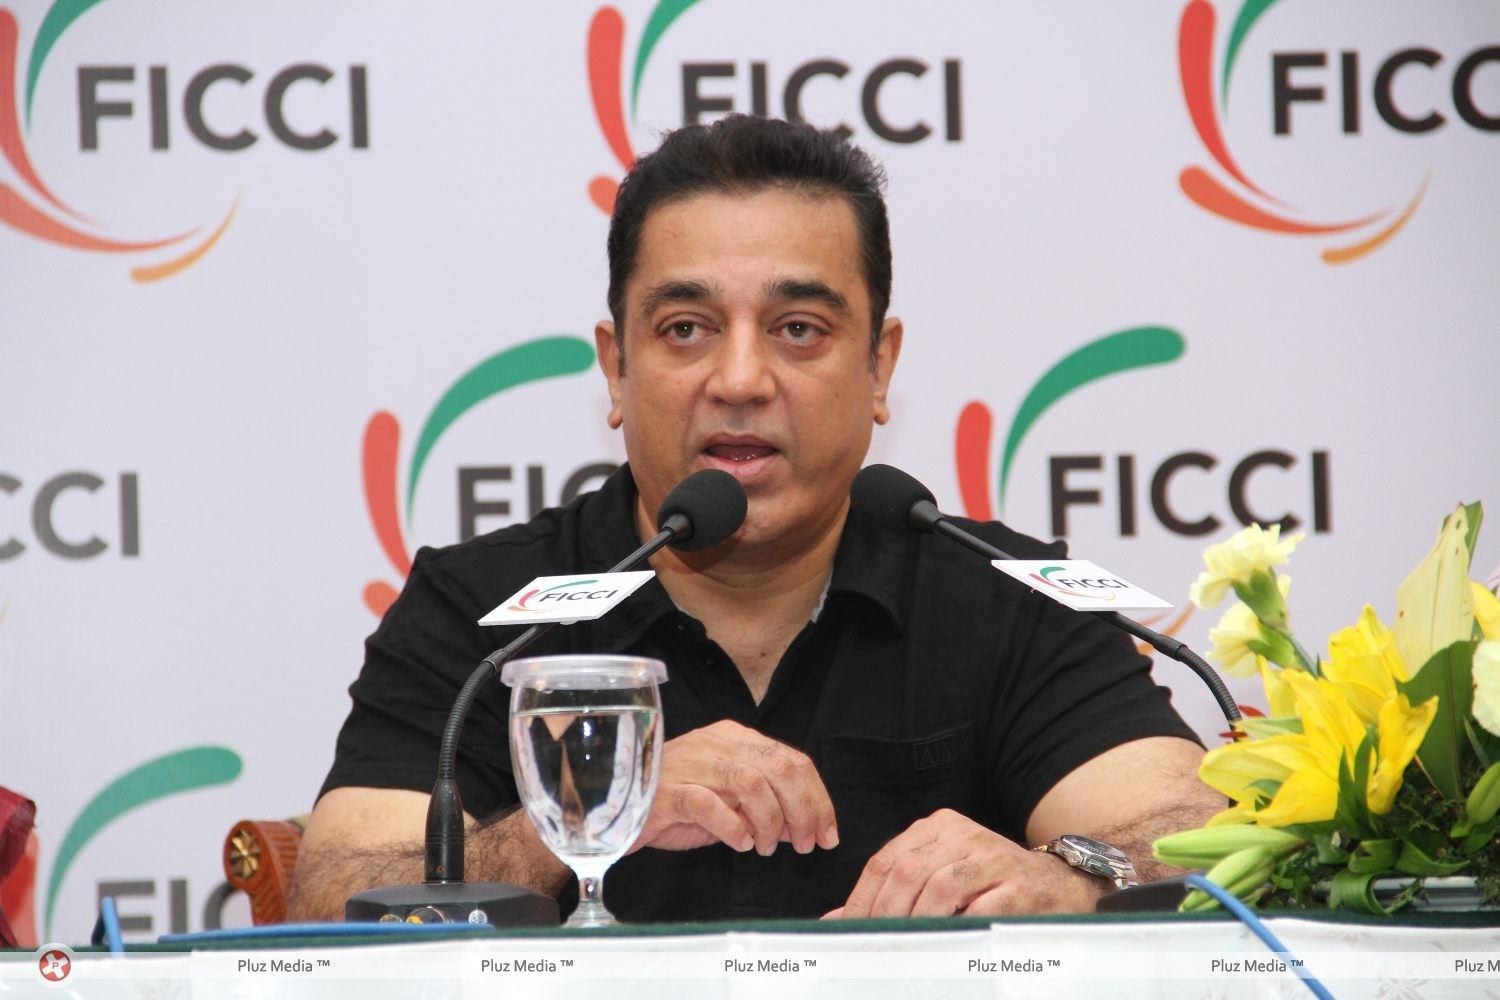 Kamal Haasan - Kamal Haasan at FICCI Press Meet Pictures | Picture 288455